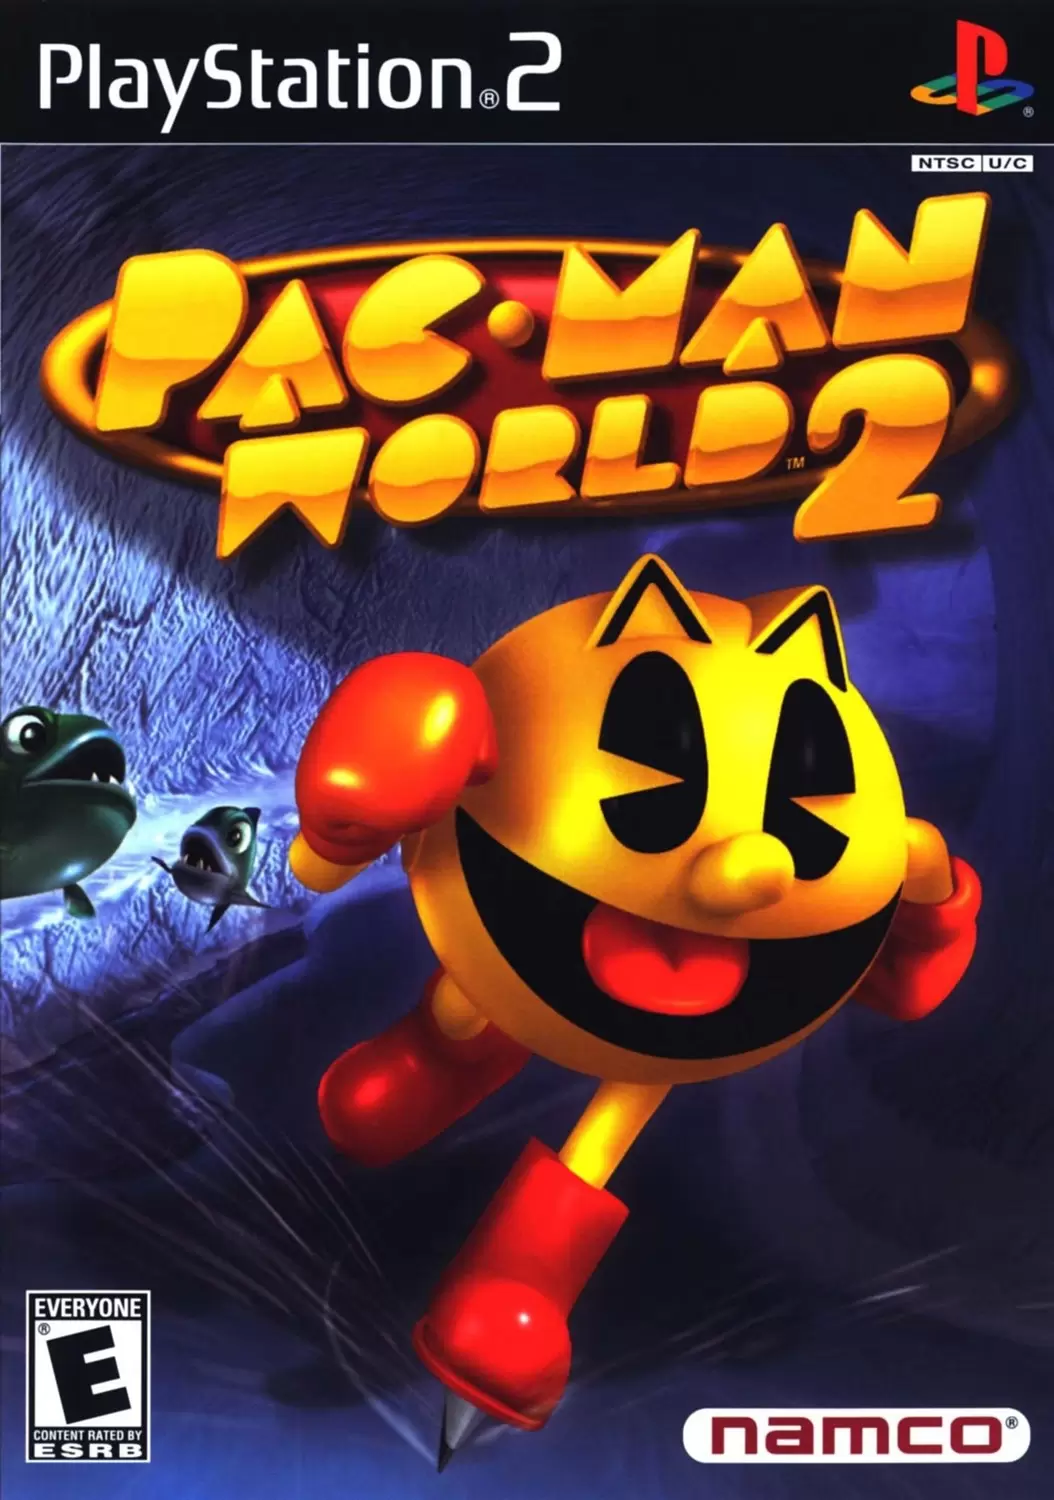 PS2 Games - Pac-Man World 2